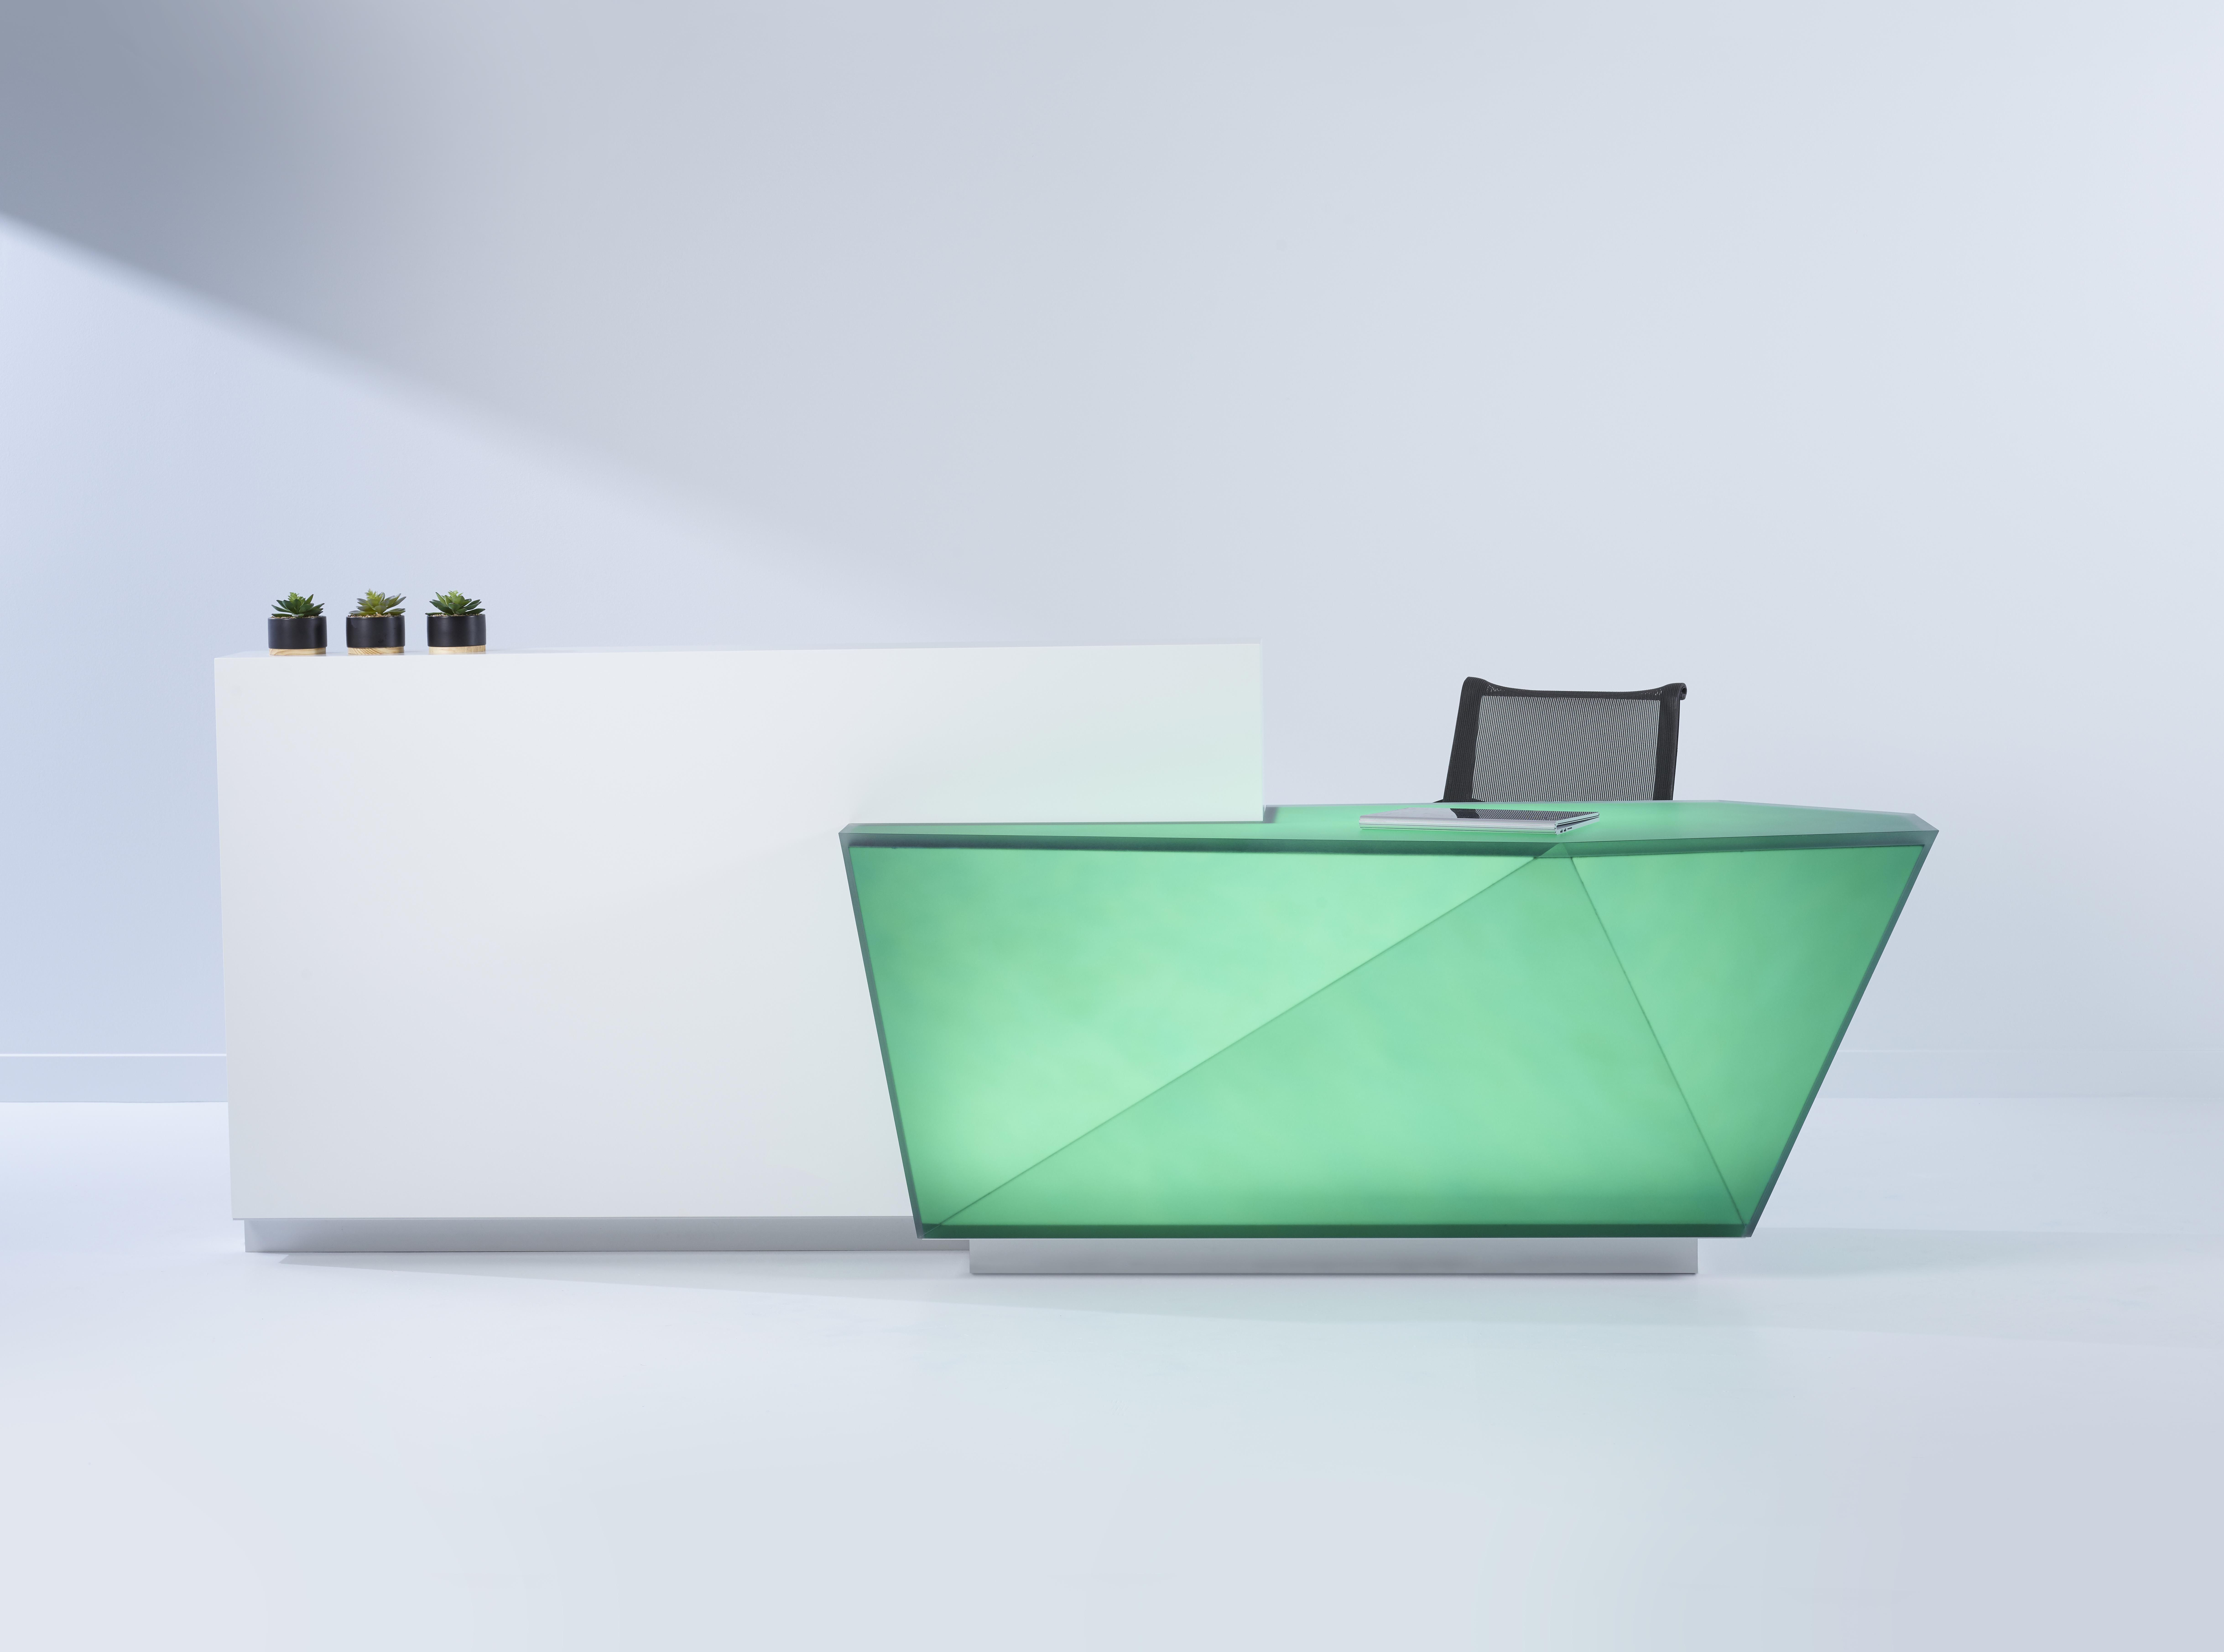 General 9750x7242 reception interior desk simple background minimalism succulent